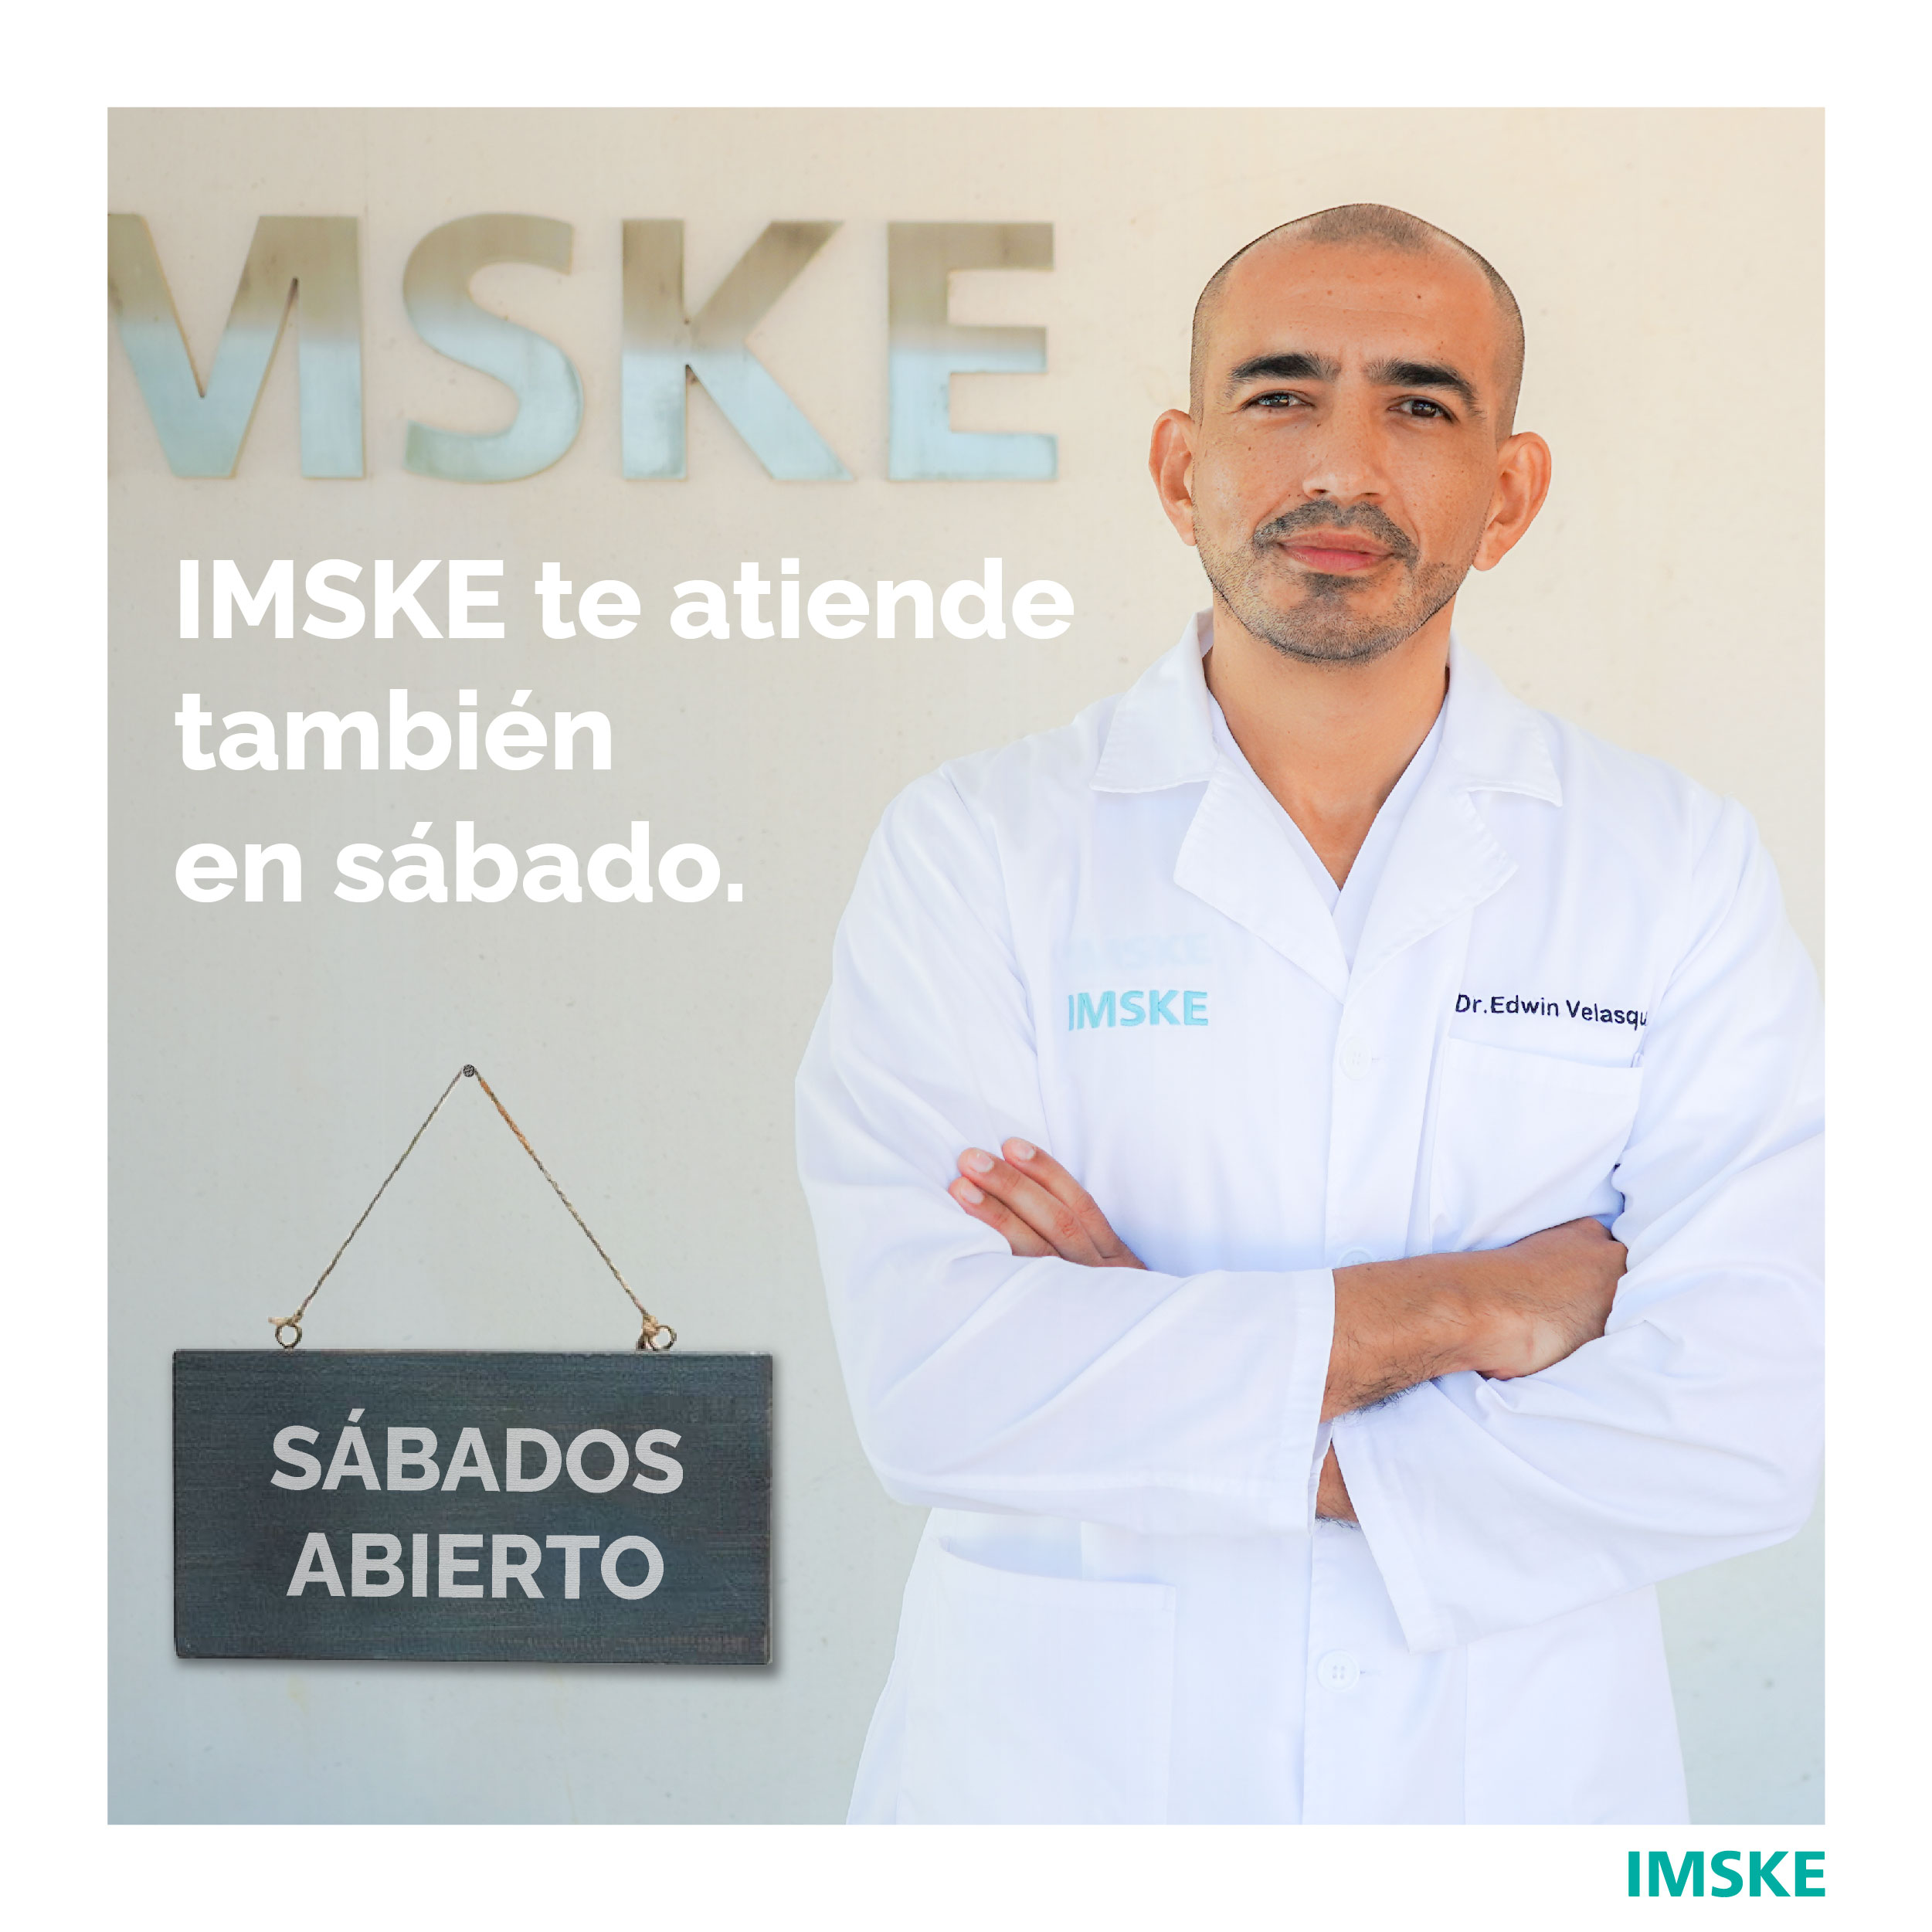 Imagen redes "Imske te atiende en sábado"